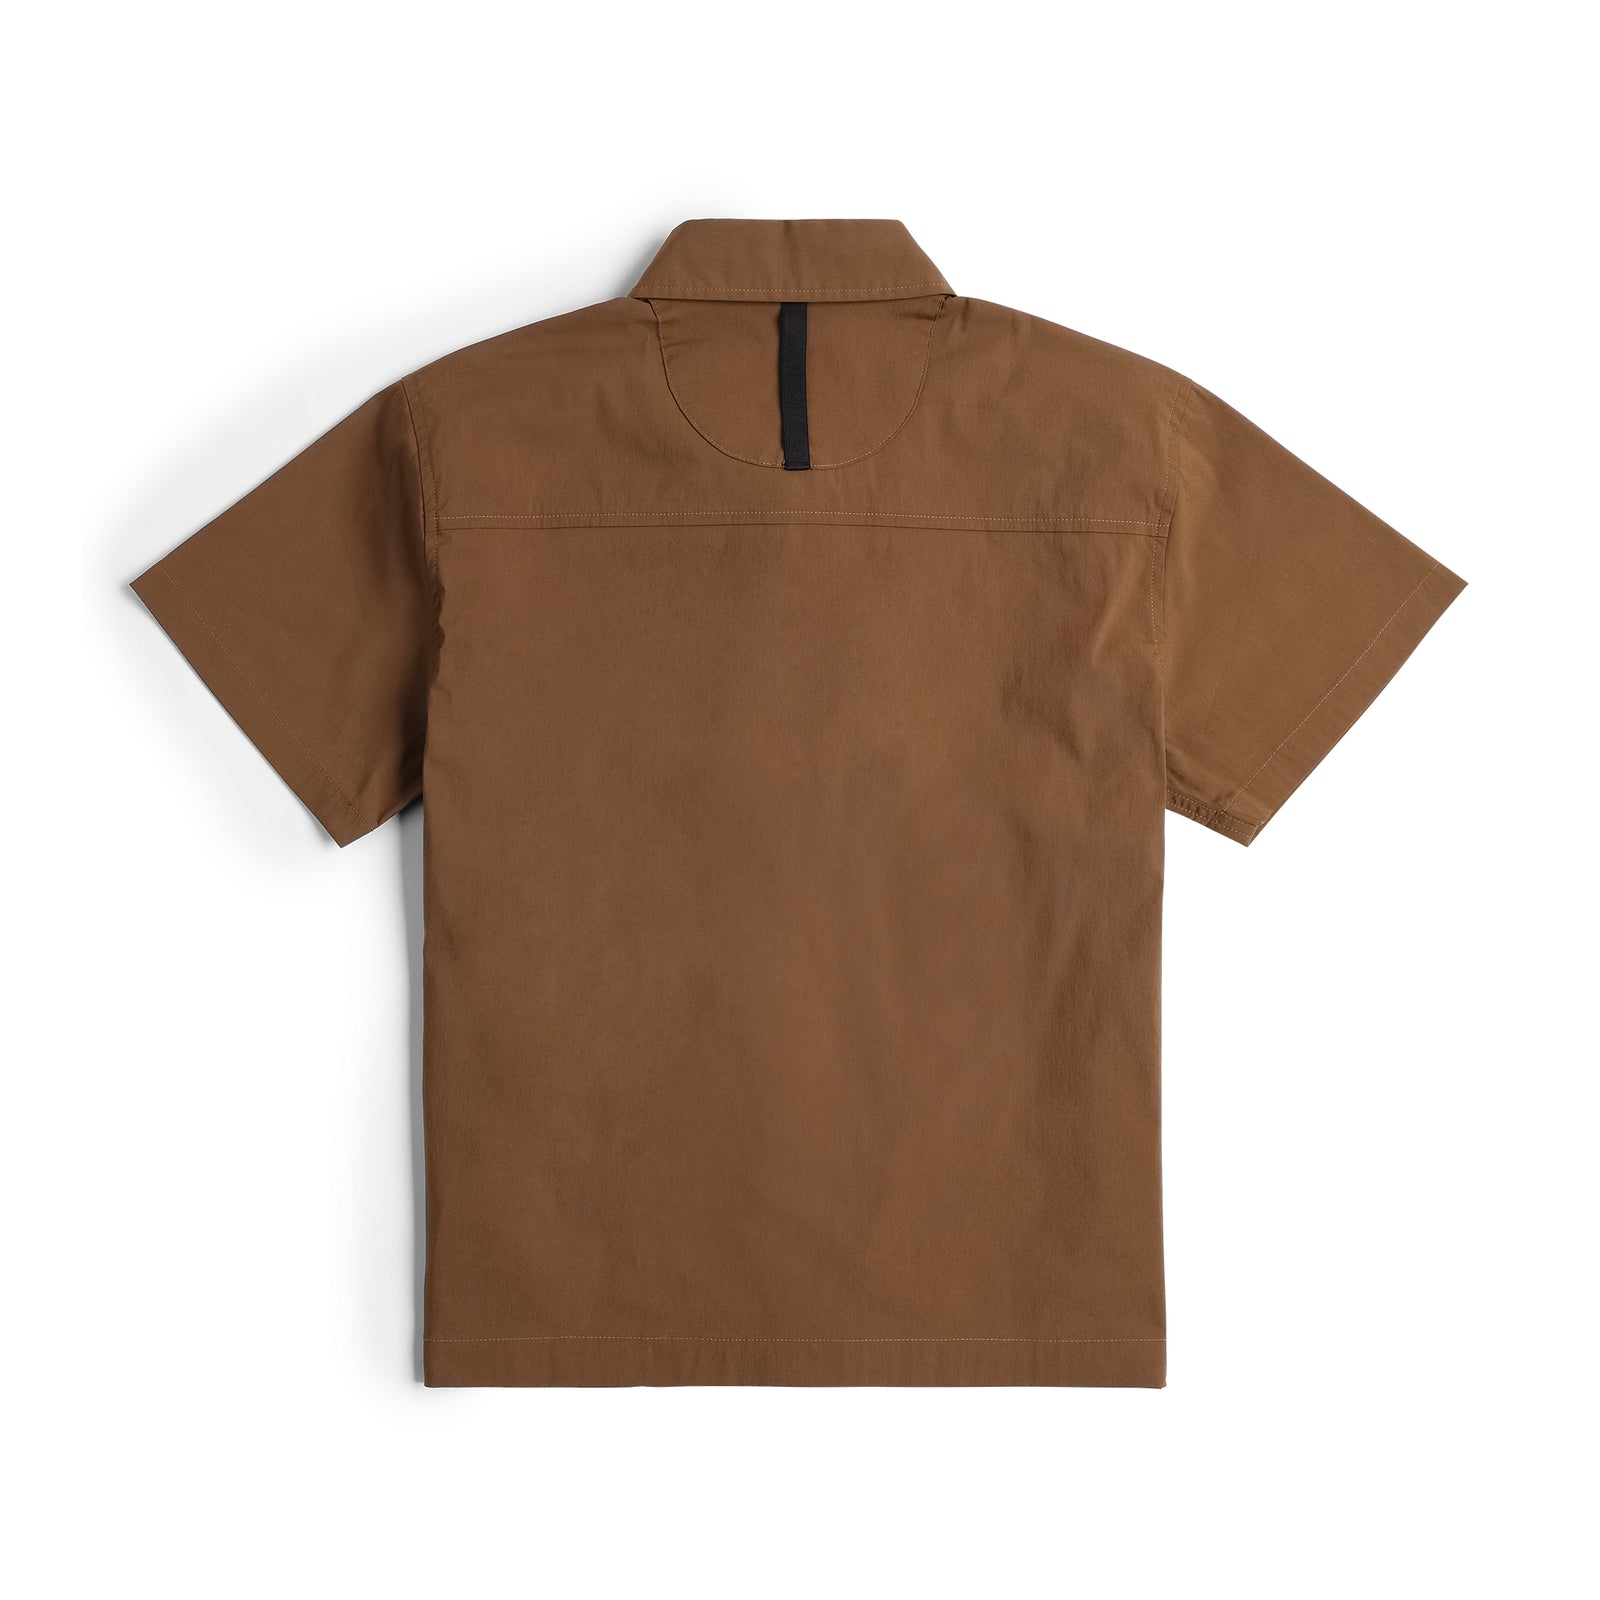 Back View of Topo Designs Global Shirt - Short Sleeve - Women's in "Desert Palm"